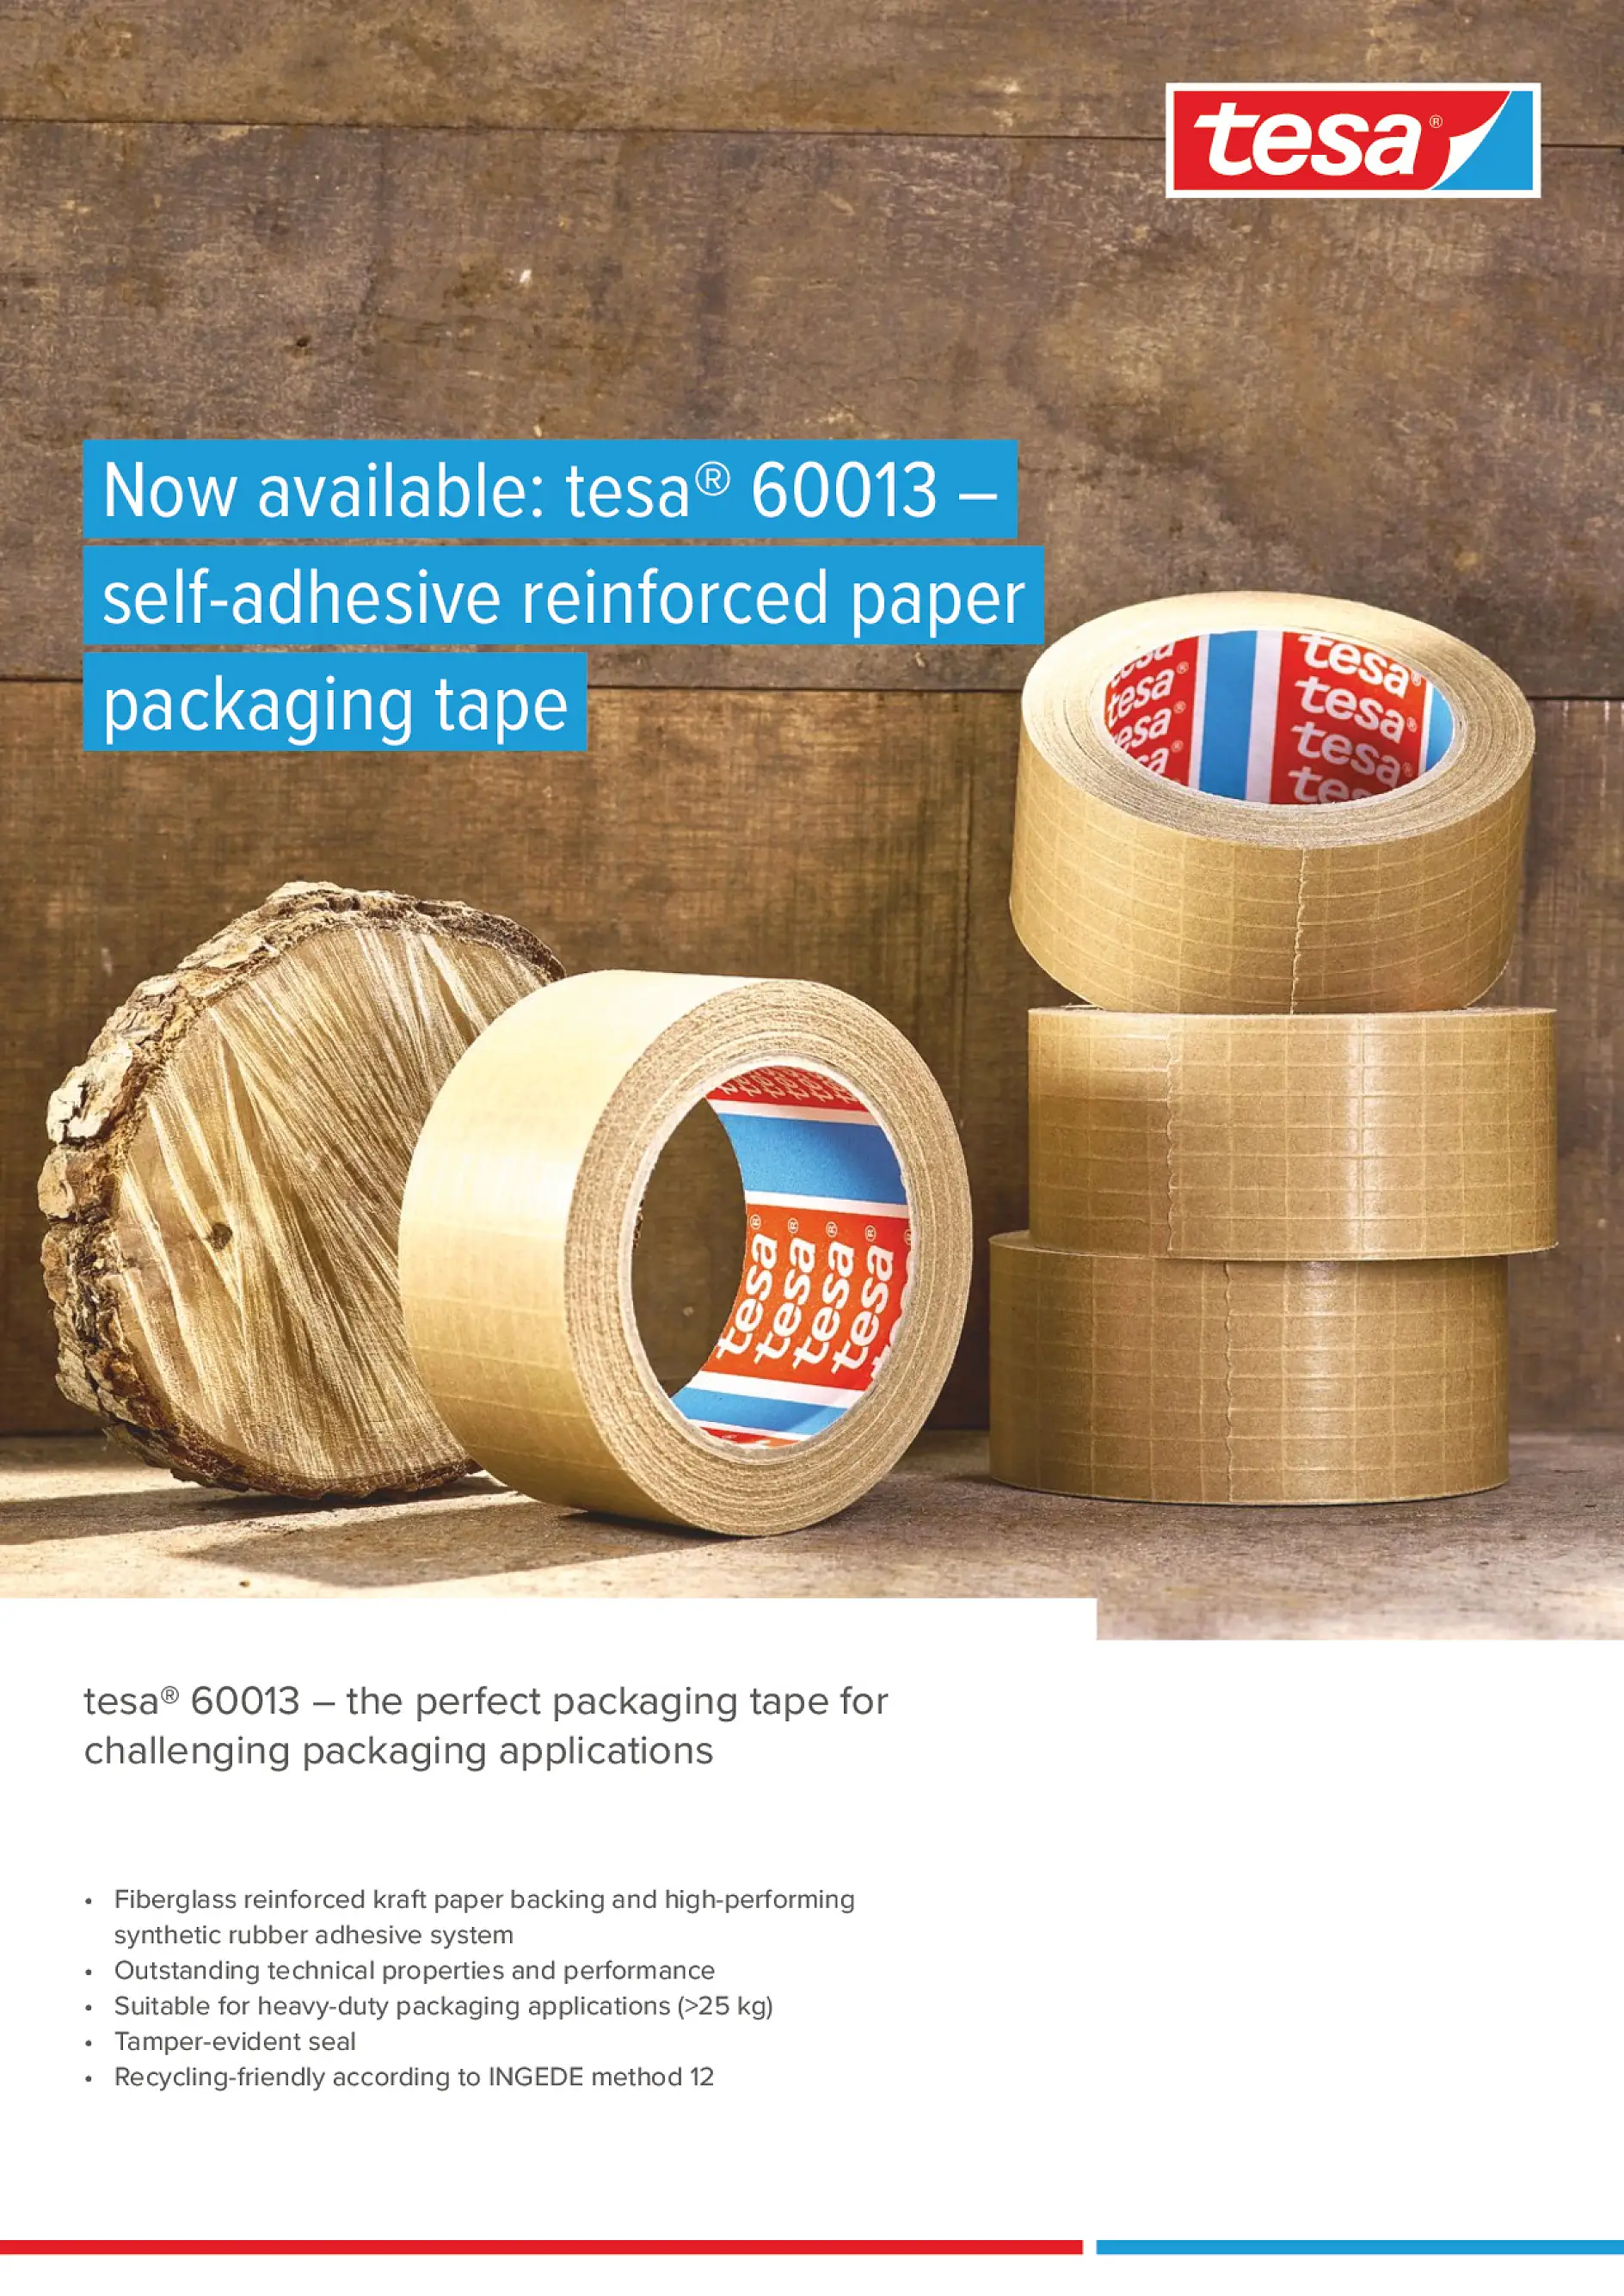 tesa® 60013 Reinforced Paper Packaging Tape Flyer